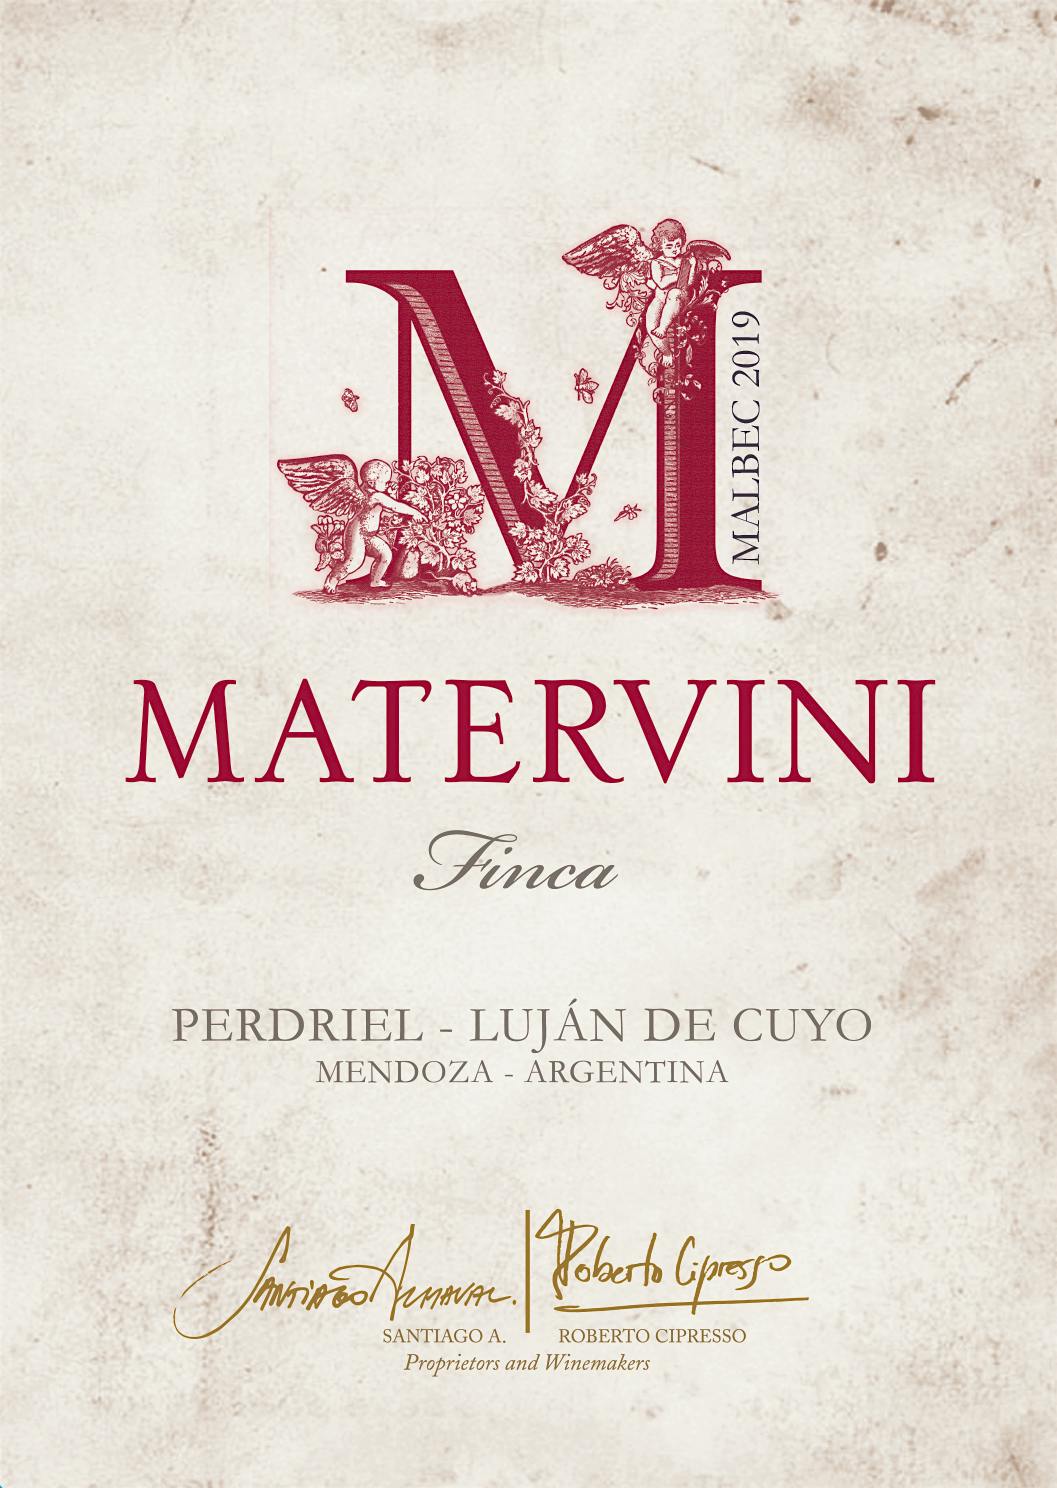 Label for Matervini